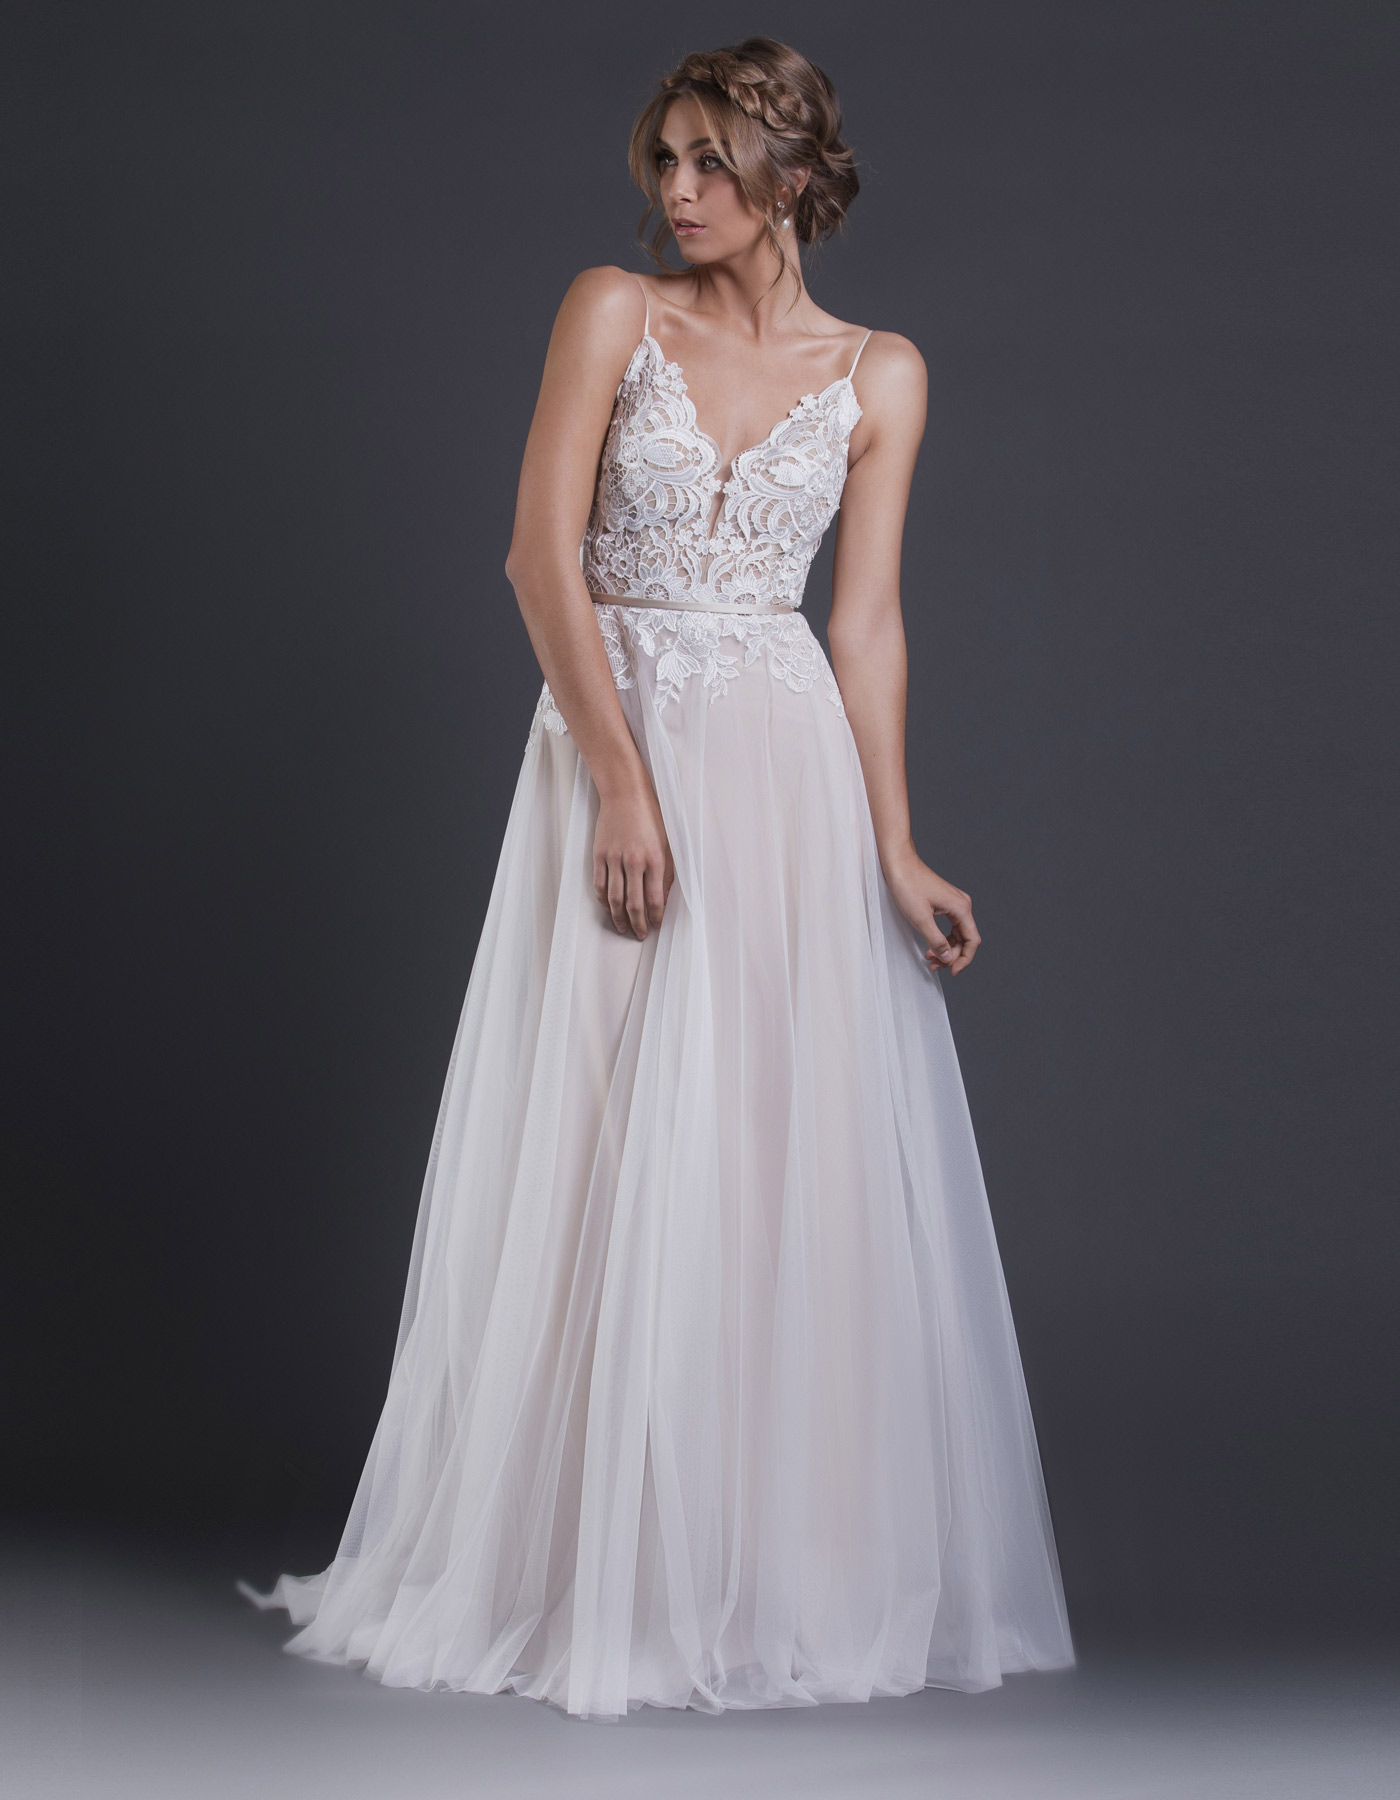 Caleche Isabella Wedding Dress - Raffaele Ciuca Bridal Shop